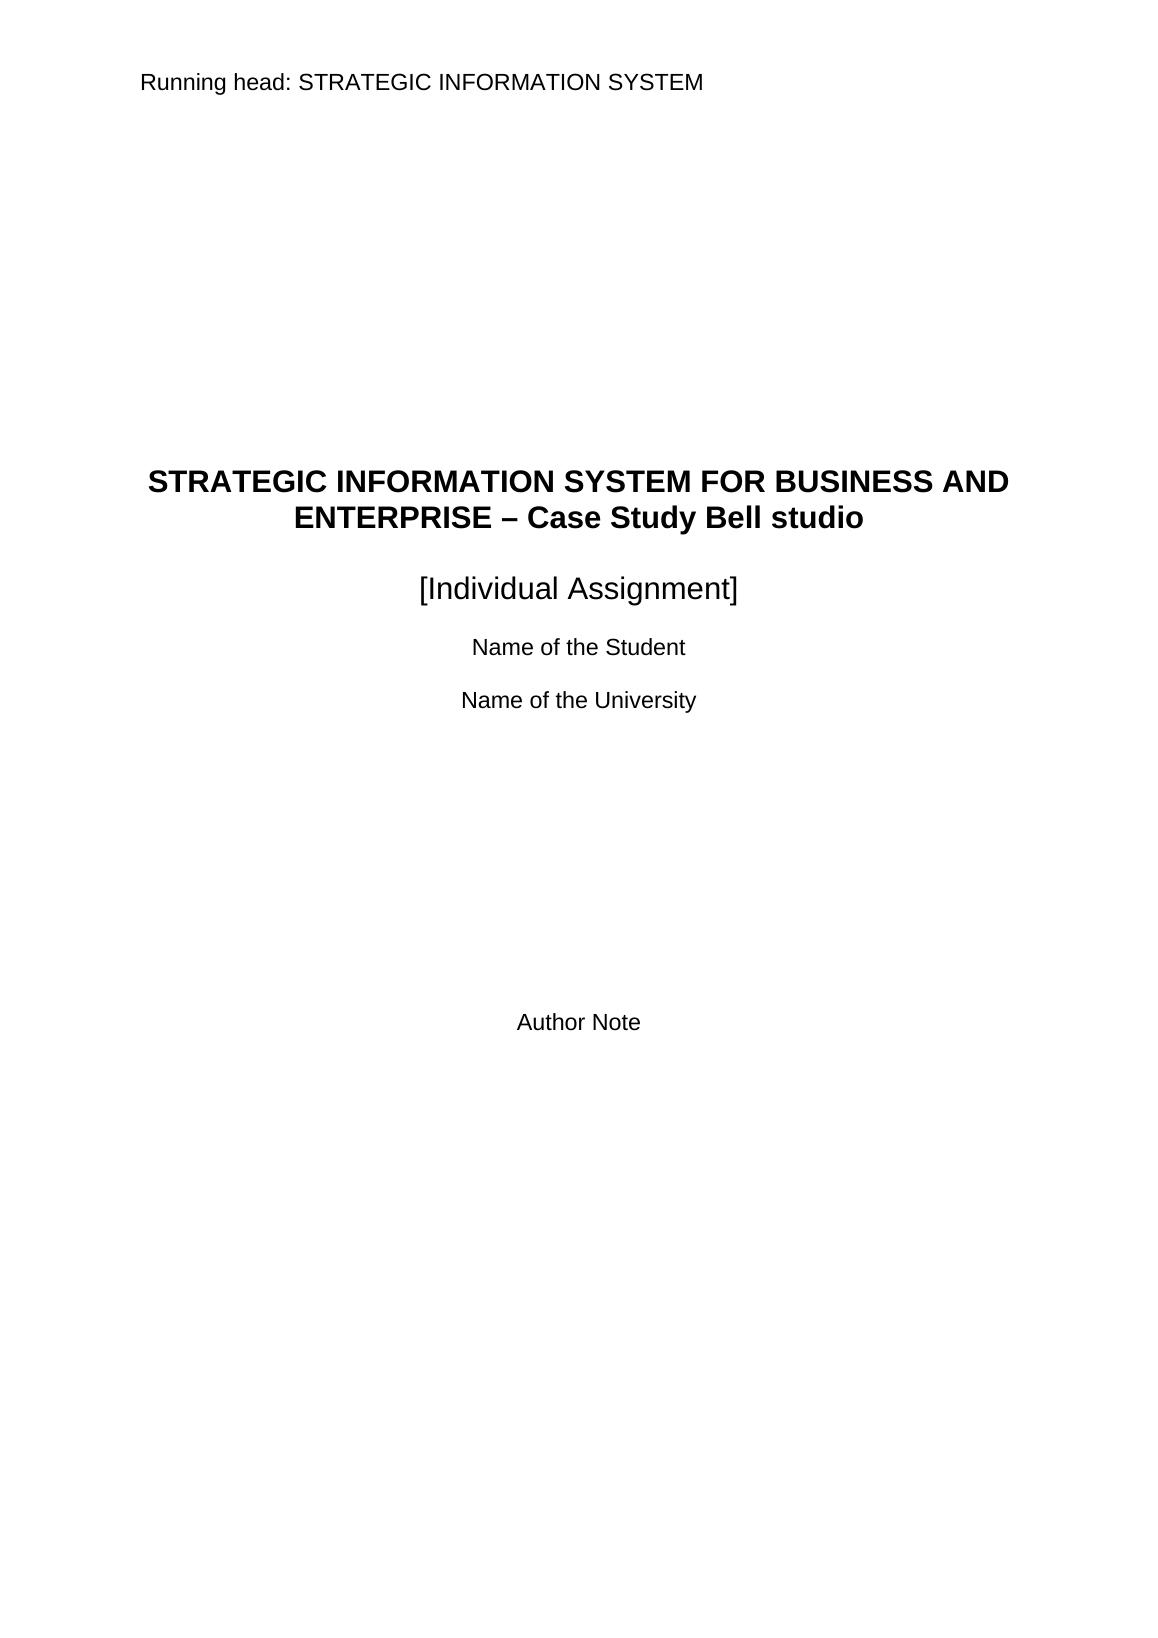 Strategic Information System for Business and Enterprise_1